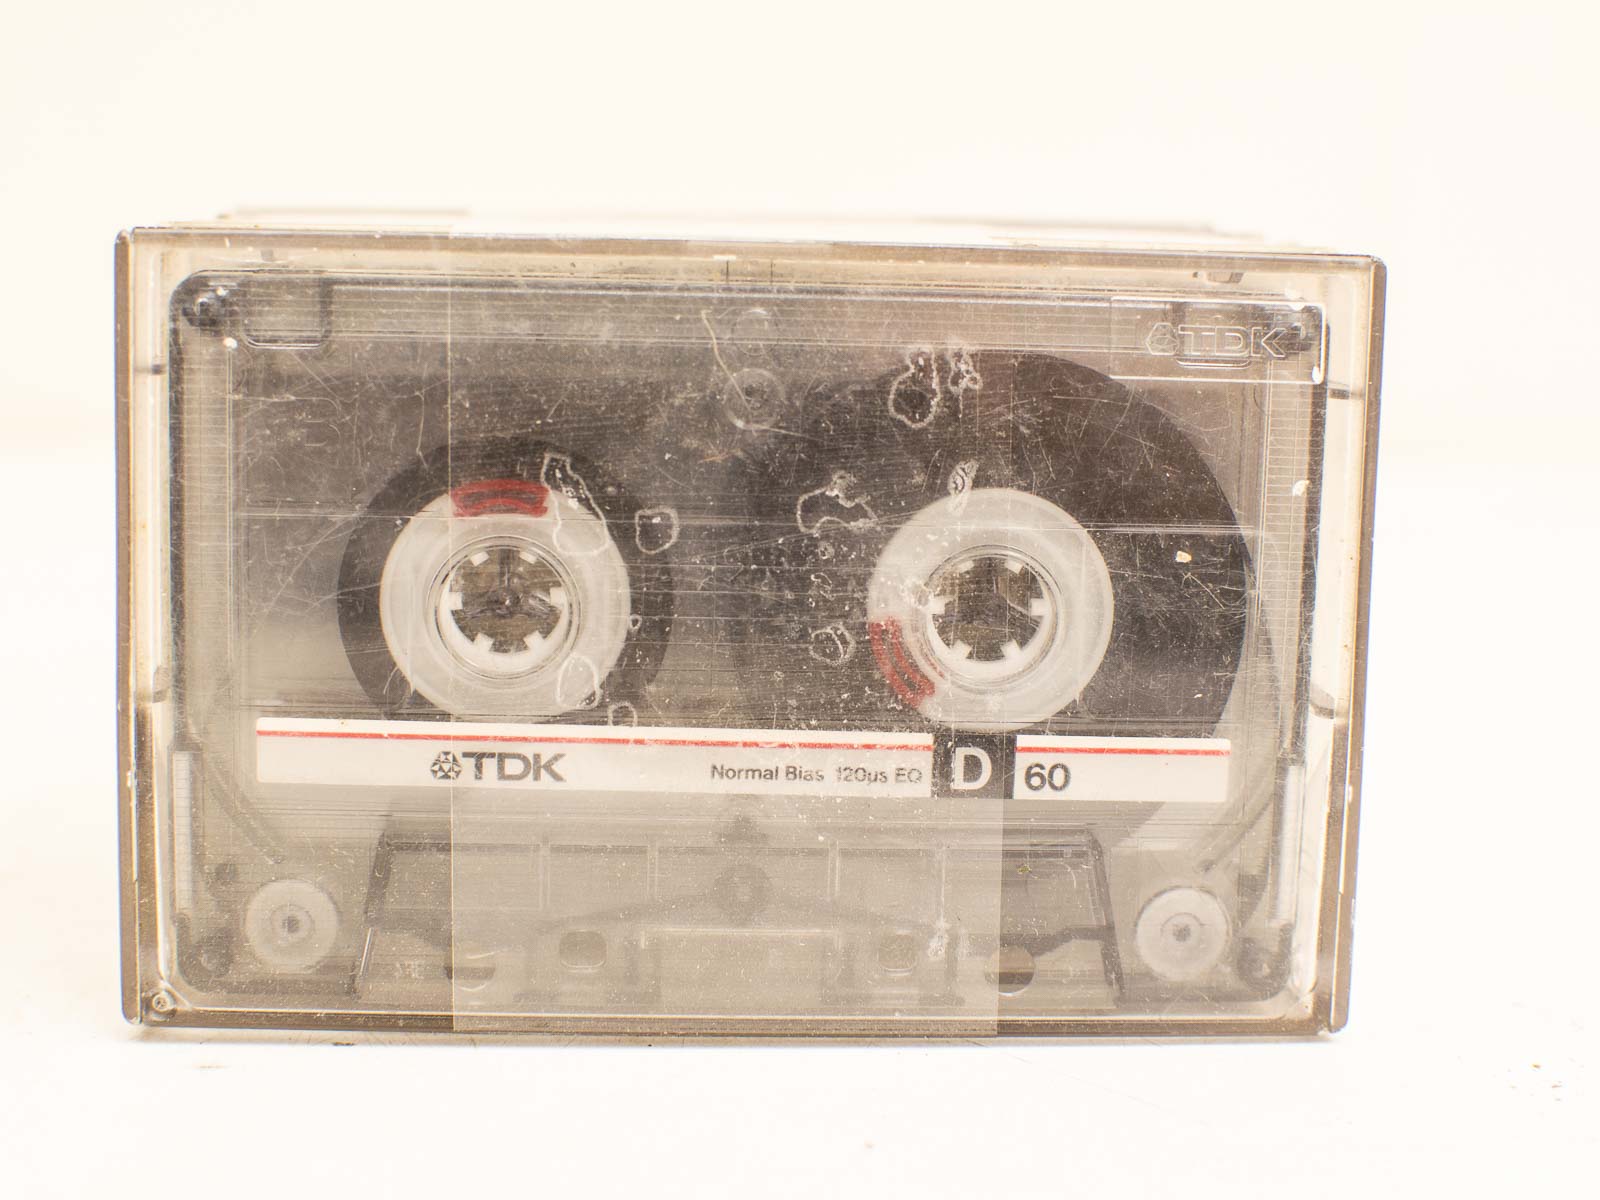 5 Tdk cassettebandjes  31515